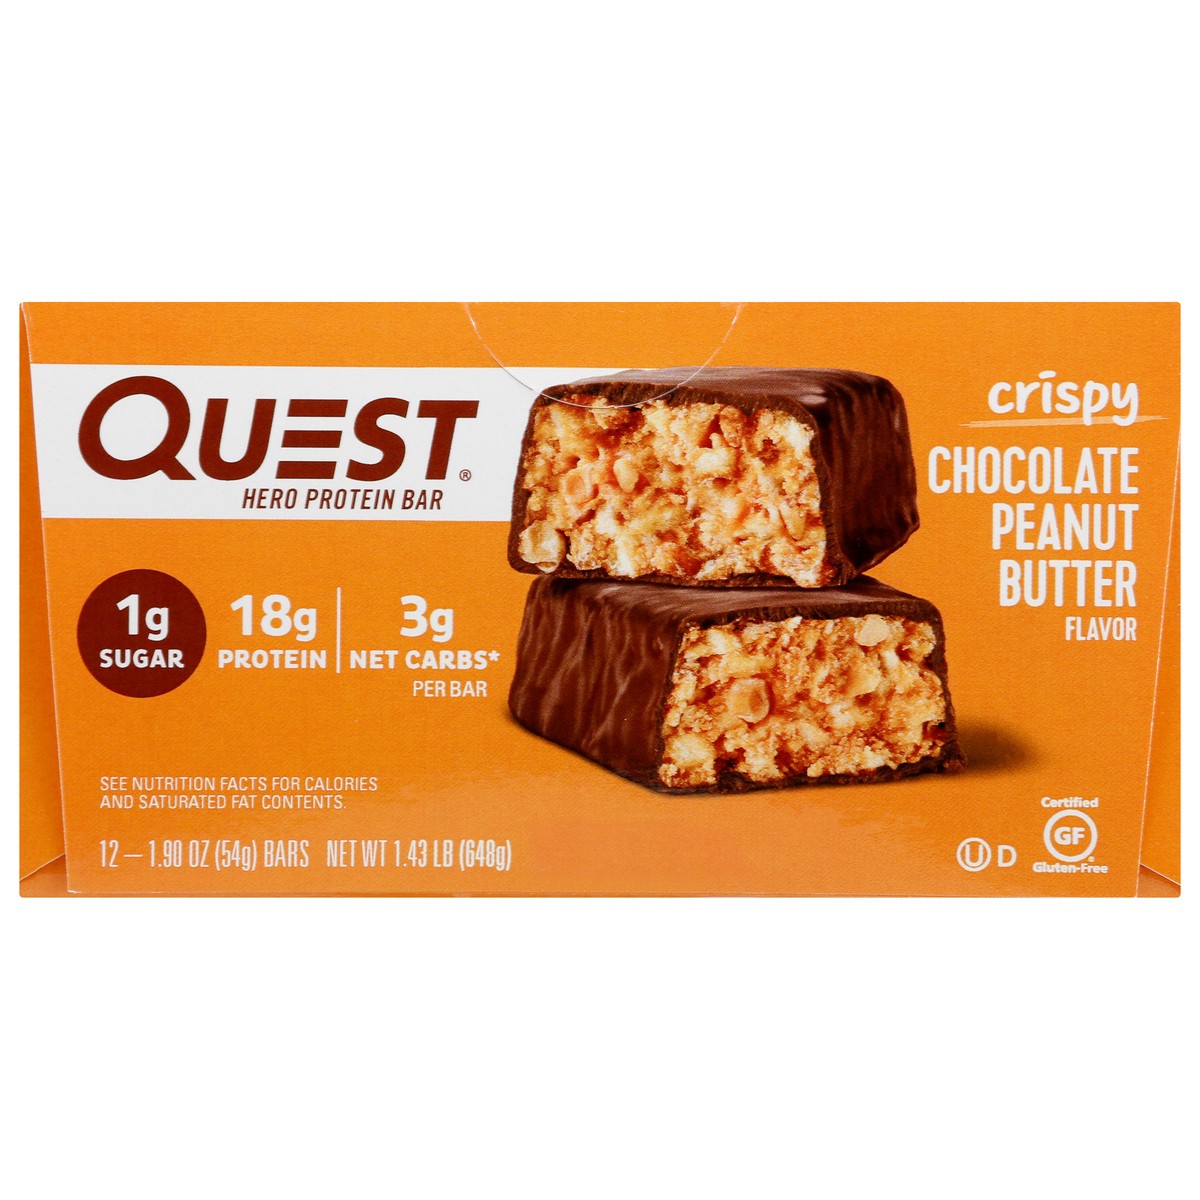 slide 1 of 6, Quest Crispy Chocolate Peanut Butter Flavor Protein Bar 12 - 1.90 oz Bars, 12 ct